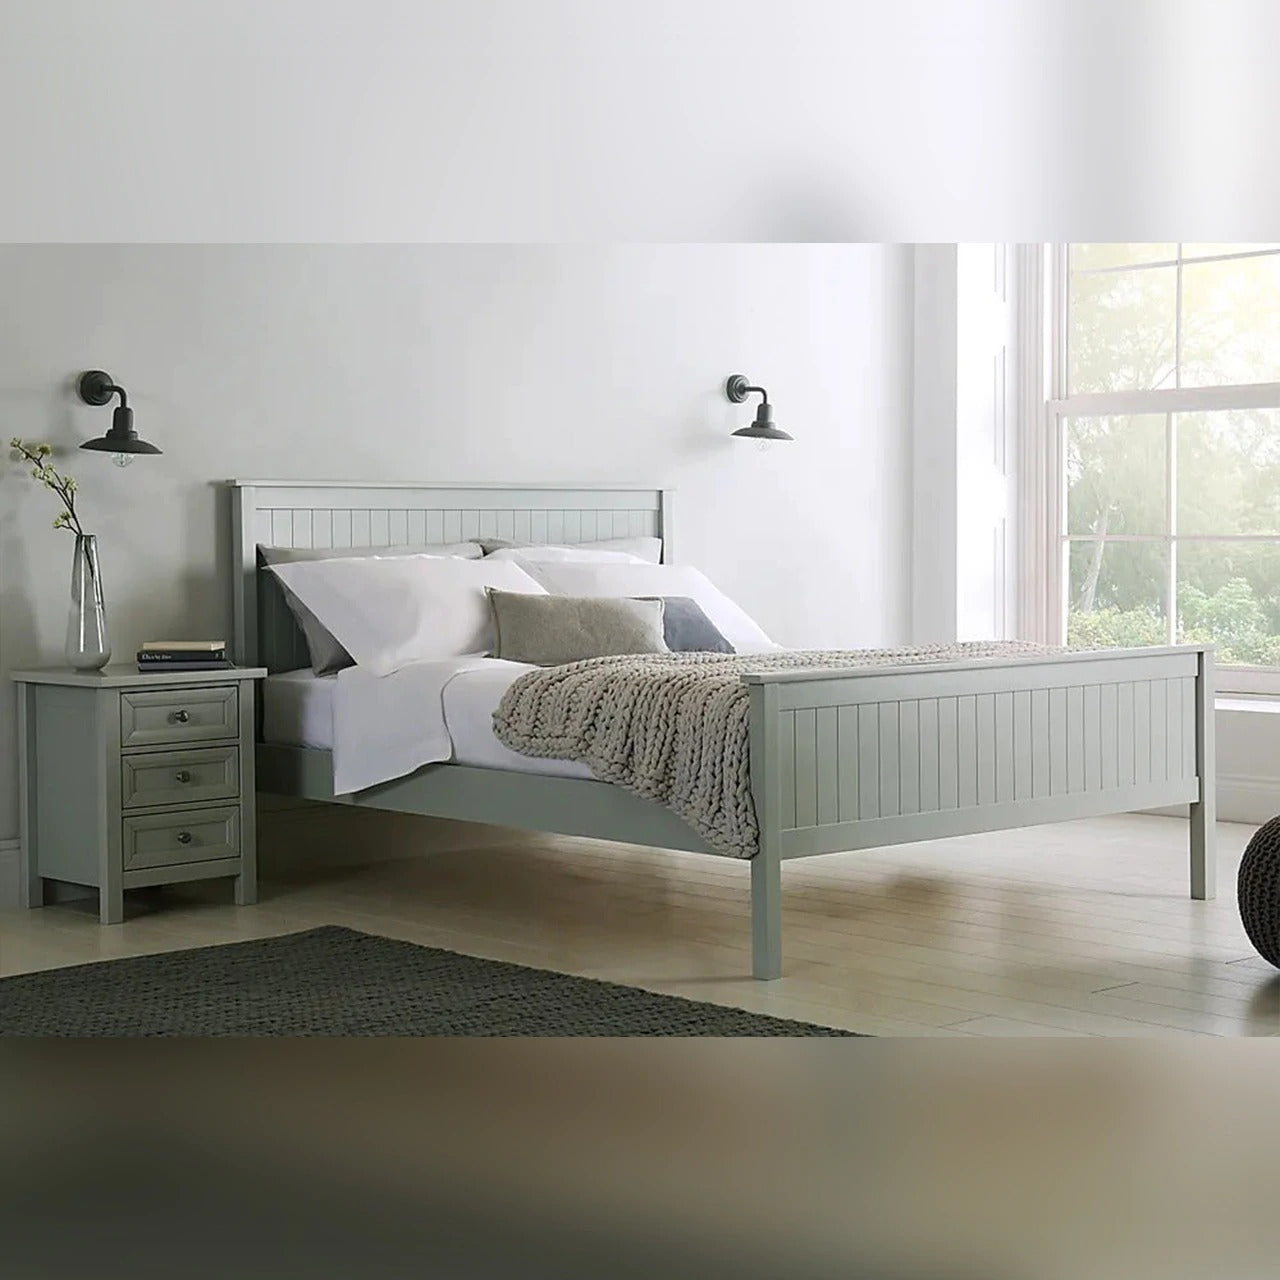 Wooden Bed Design, Wooden Box Khat Design, Unique Wooden Bed Design